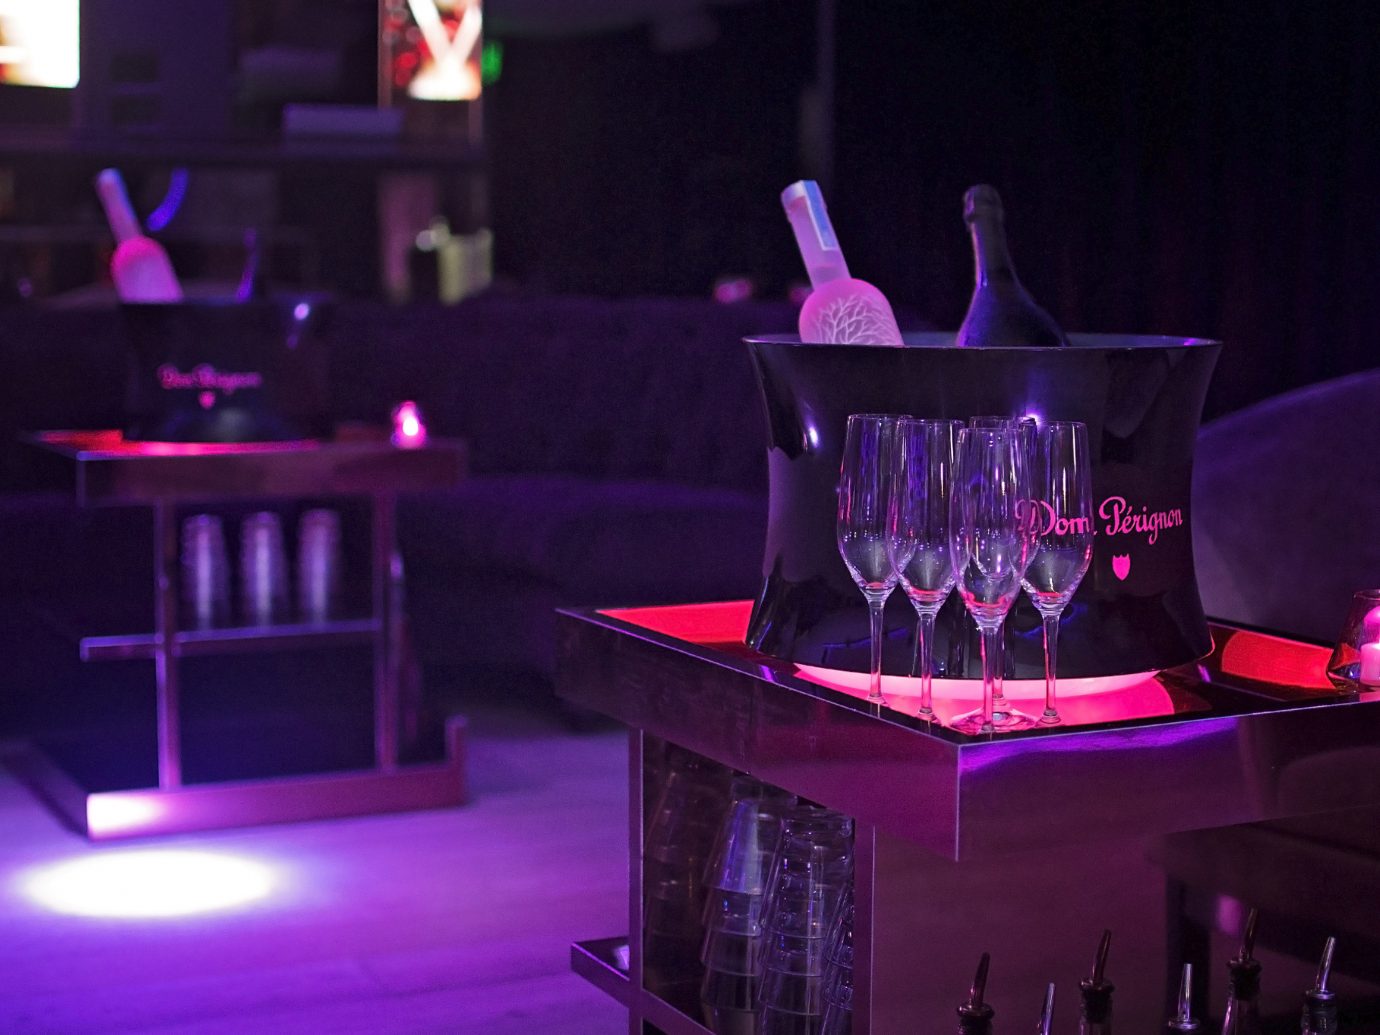 Trip Ideas indoor candle lit stage nightclub disco lighting Bar musical theatre purple scenographer dark